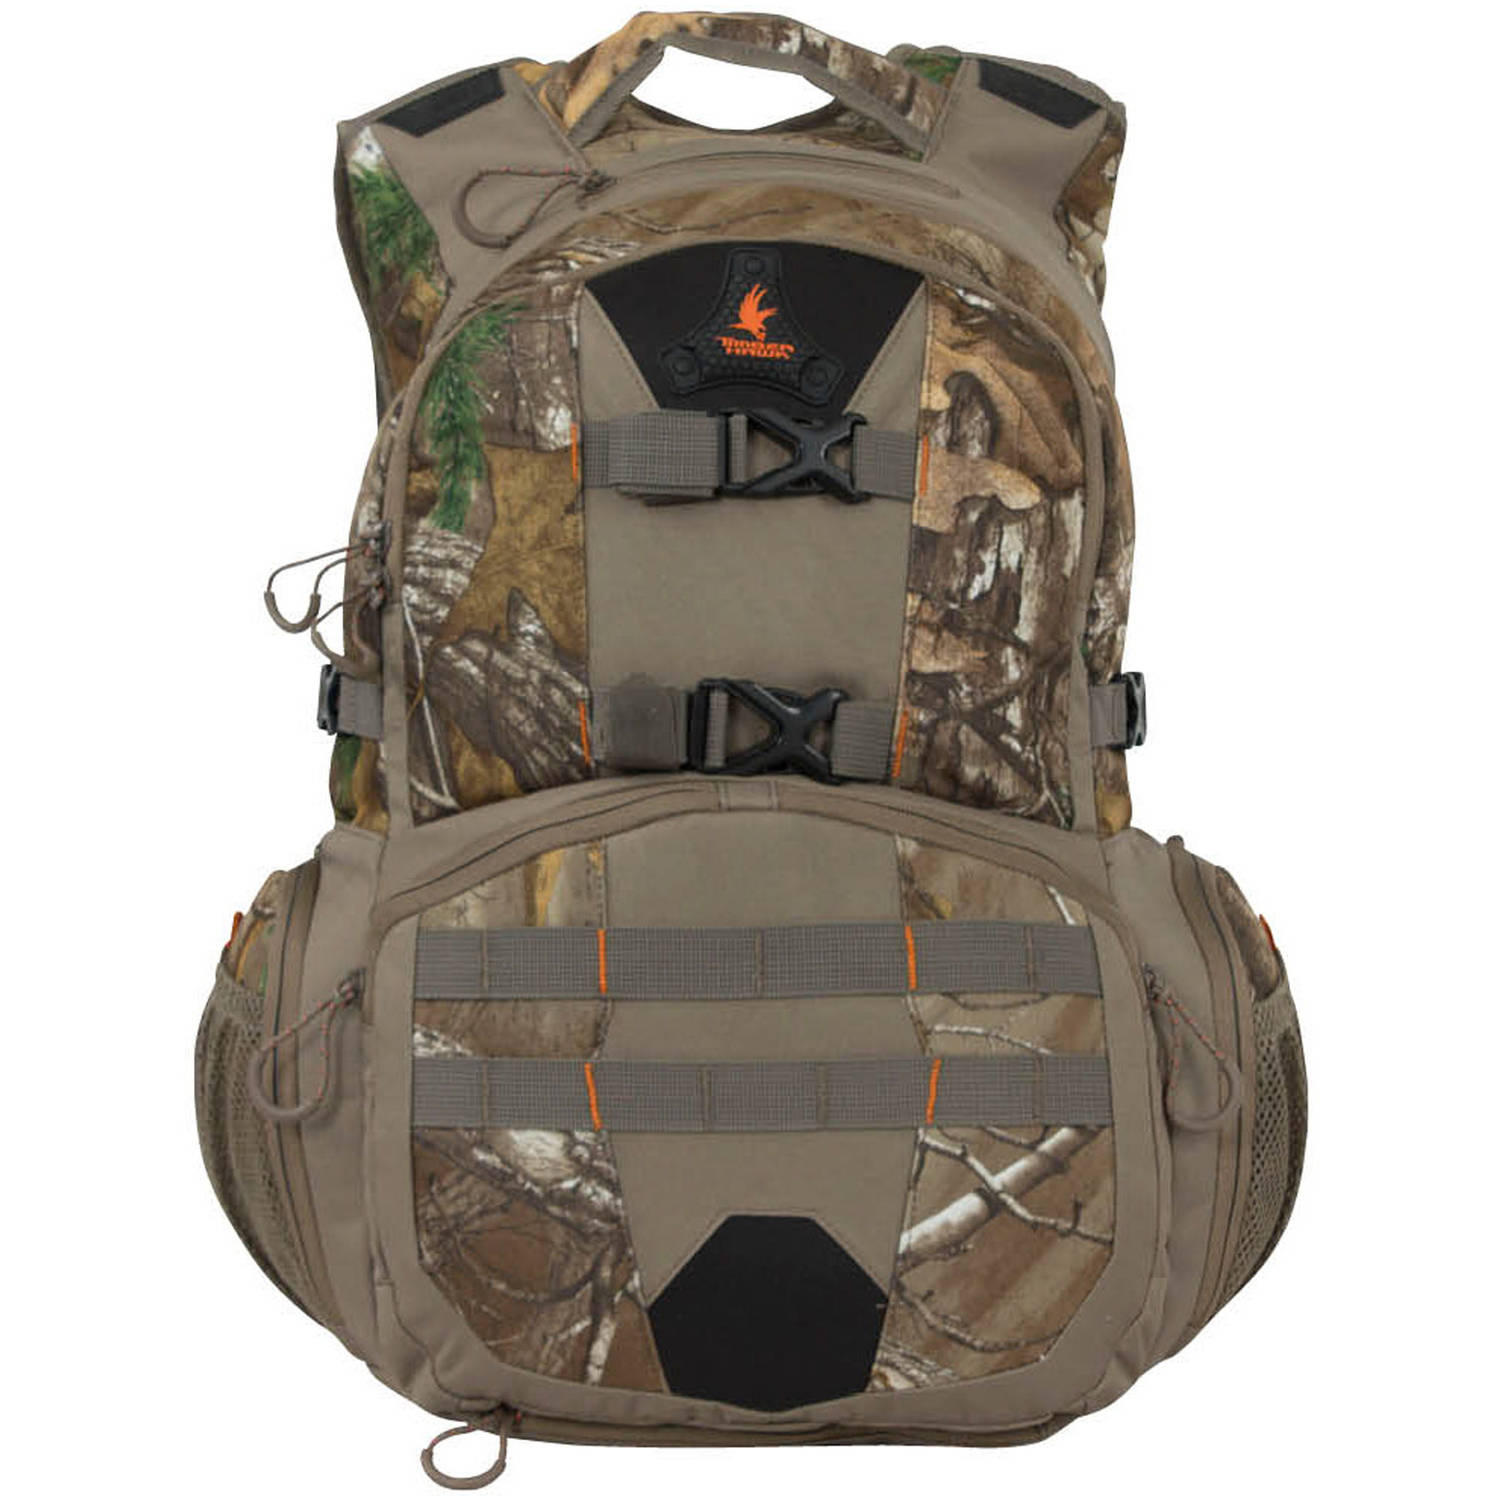 Timberhawk Kodiak 29 L Hunting Backpack, Realtree Xtra Camouflage, Unisex, Green - image 1 of 6